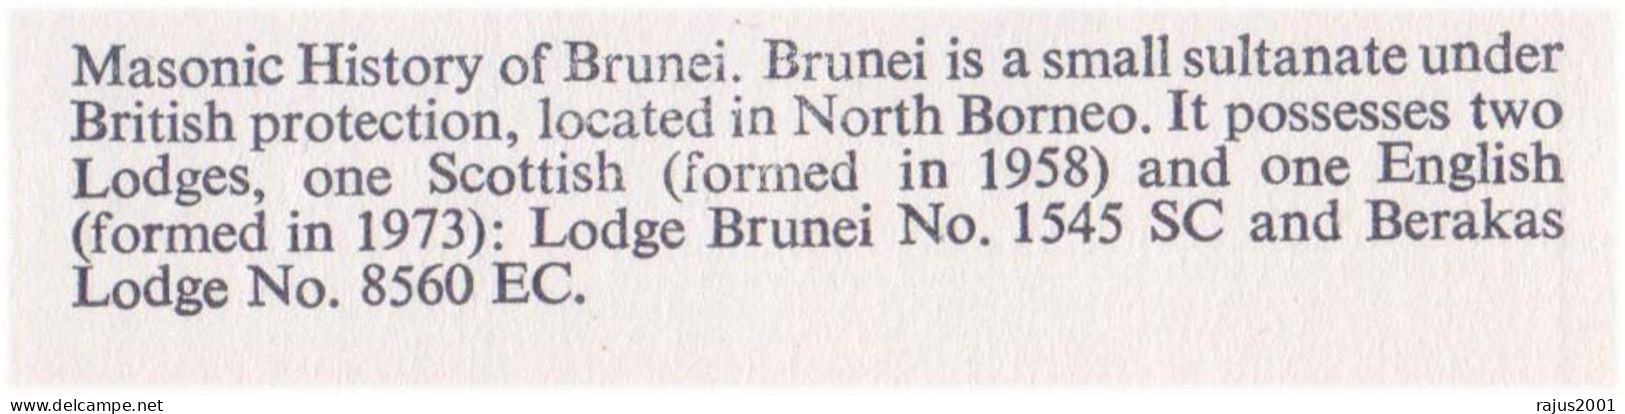 Masonic History Of Brunei, Lodge Brunei No 1545, Berakas Lodge No 8560, Bats, Bat, Animal, Freemasonry, Masonic Cover - Freemasonry